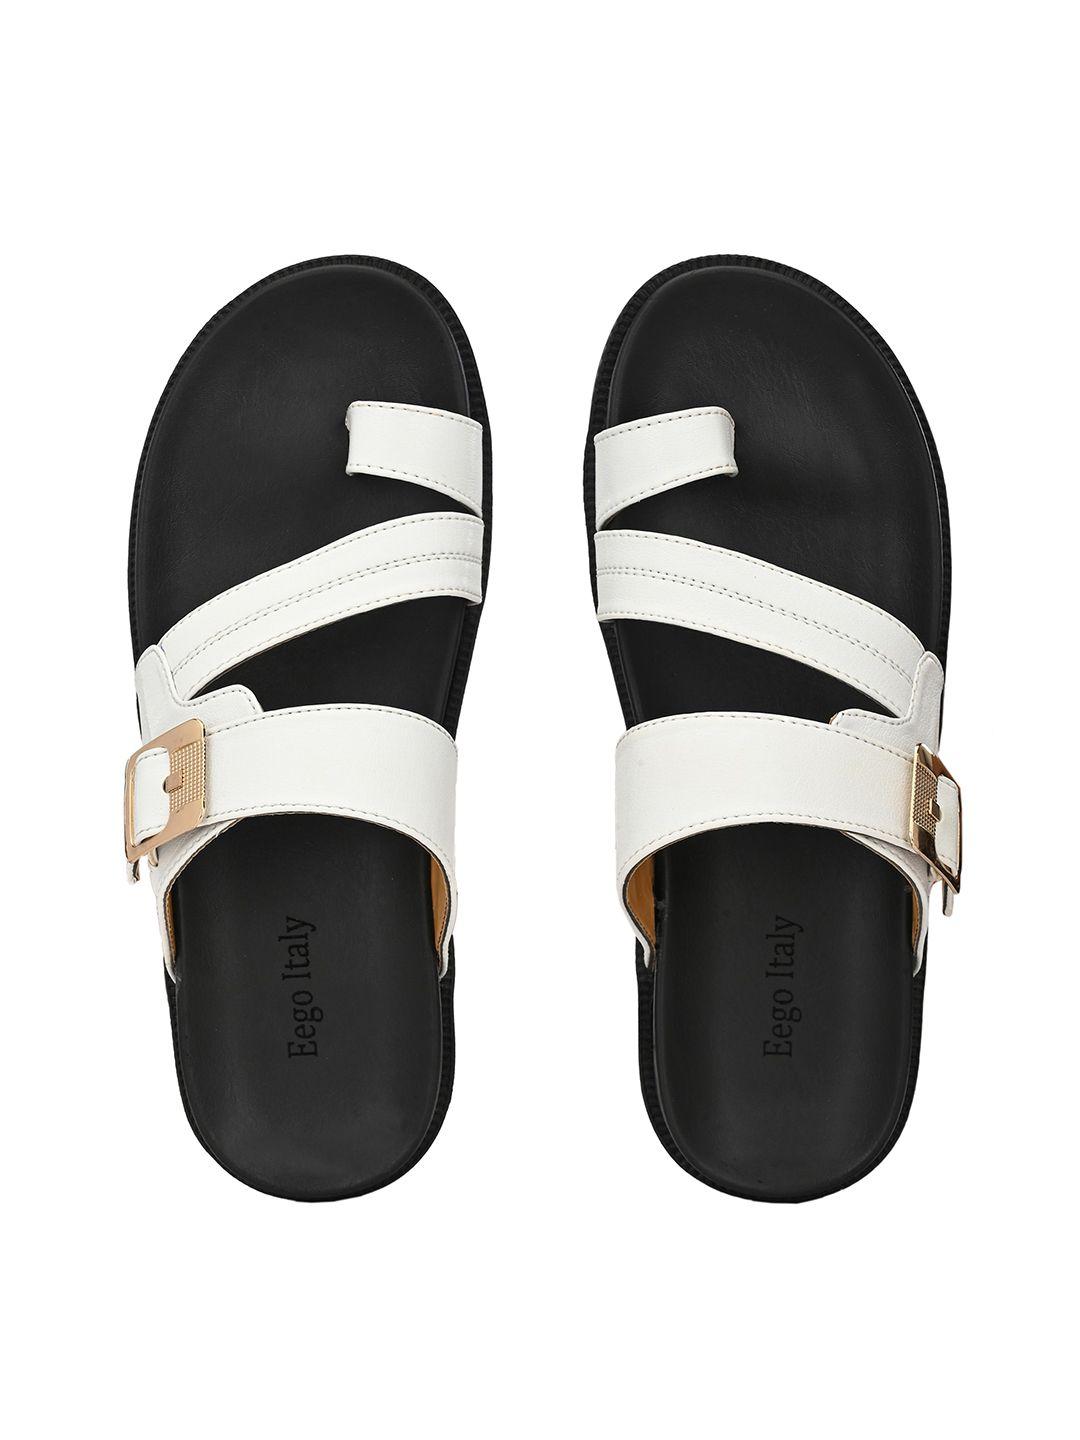 eego italy men padded comfort sandals